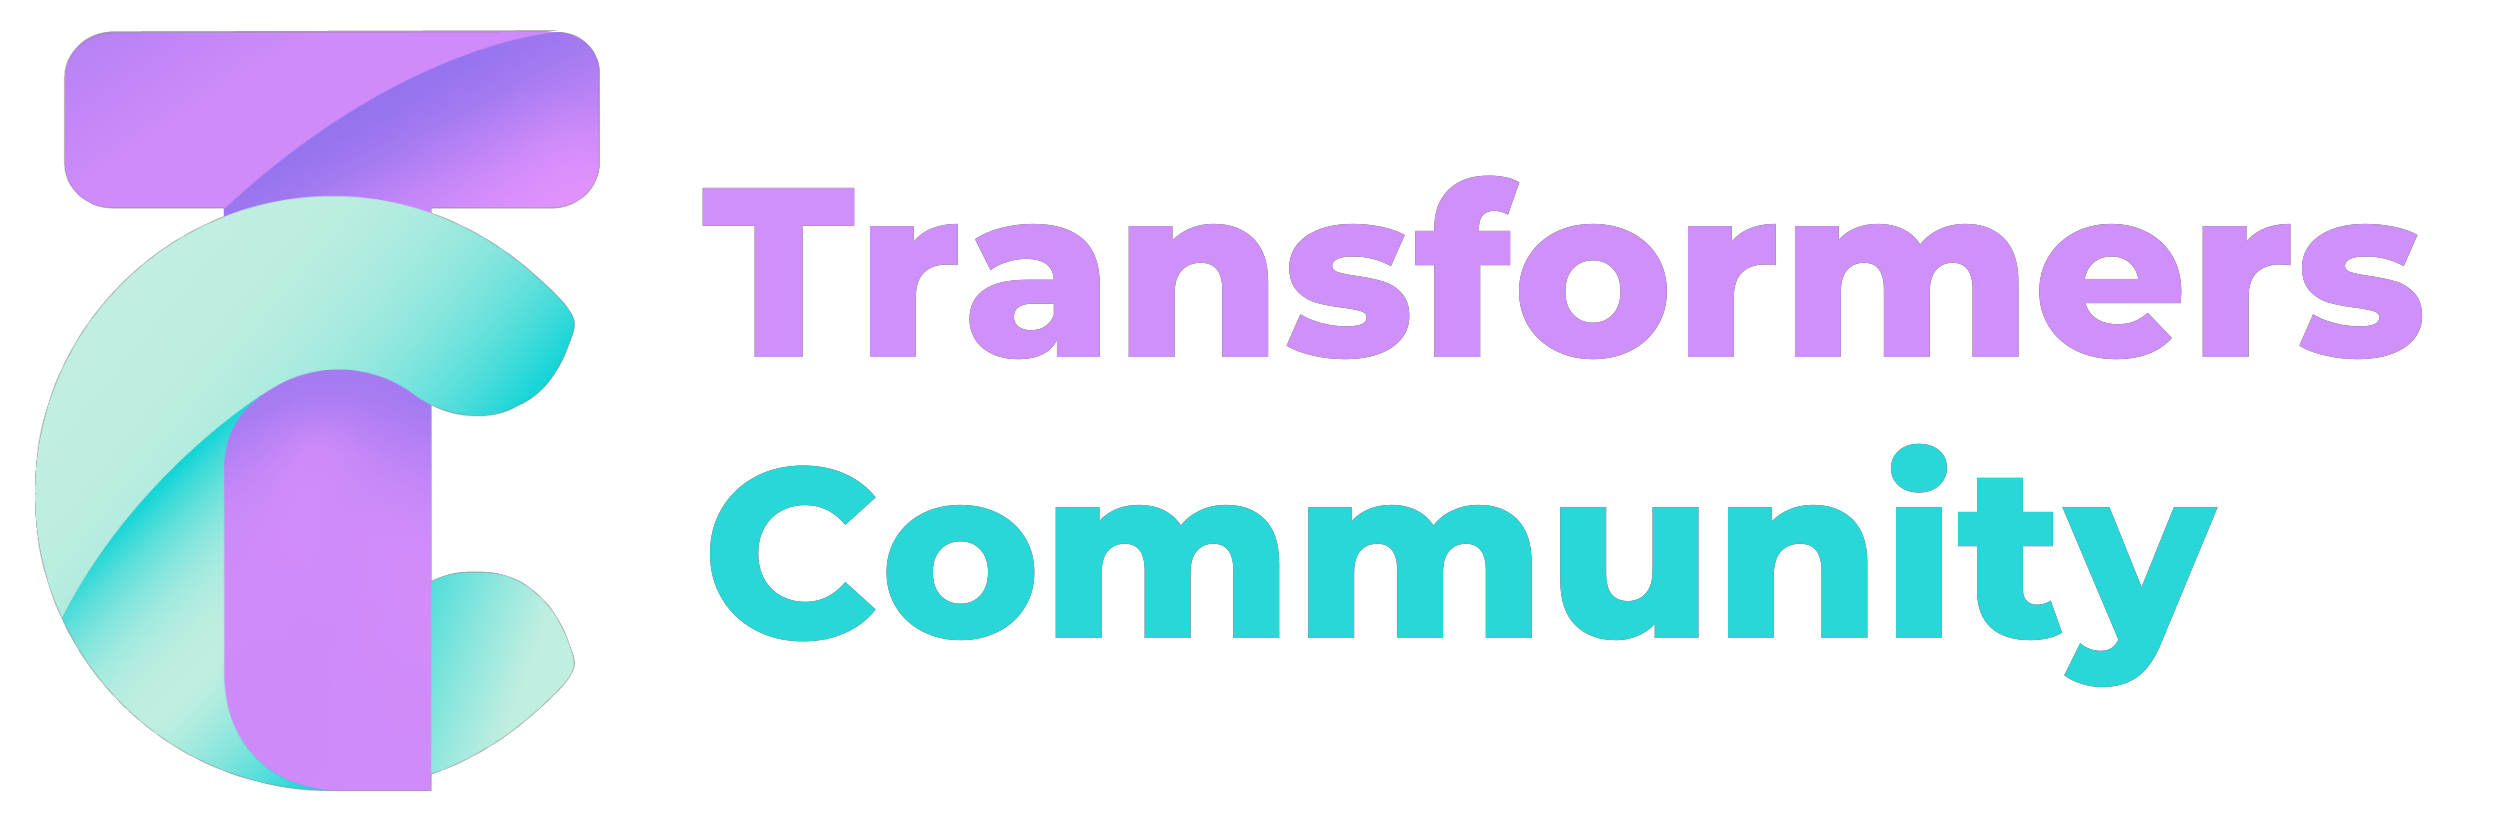 Transformers Community